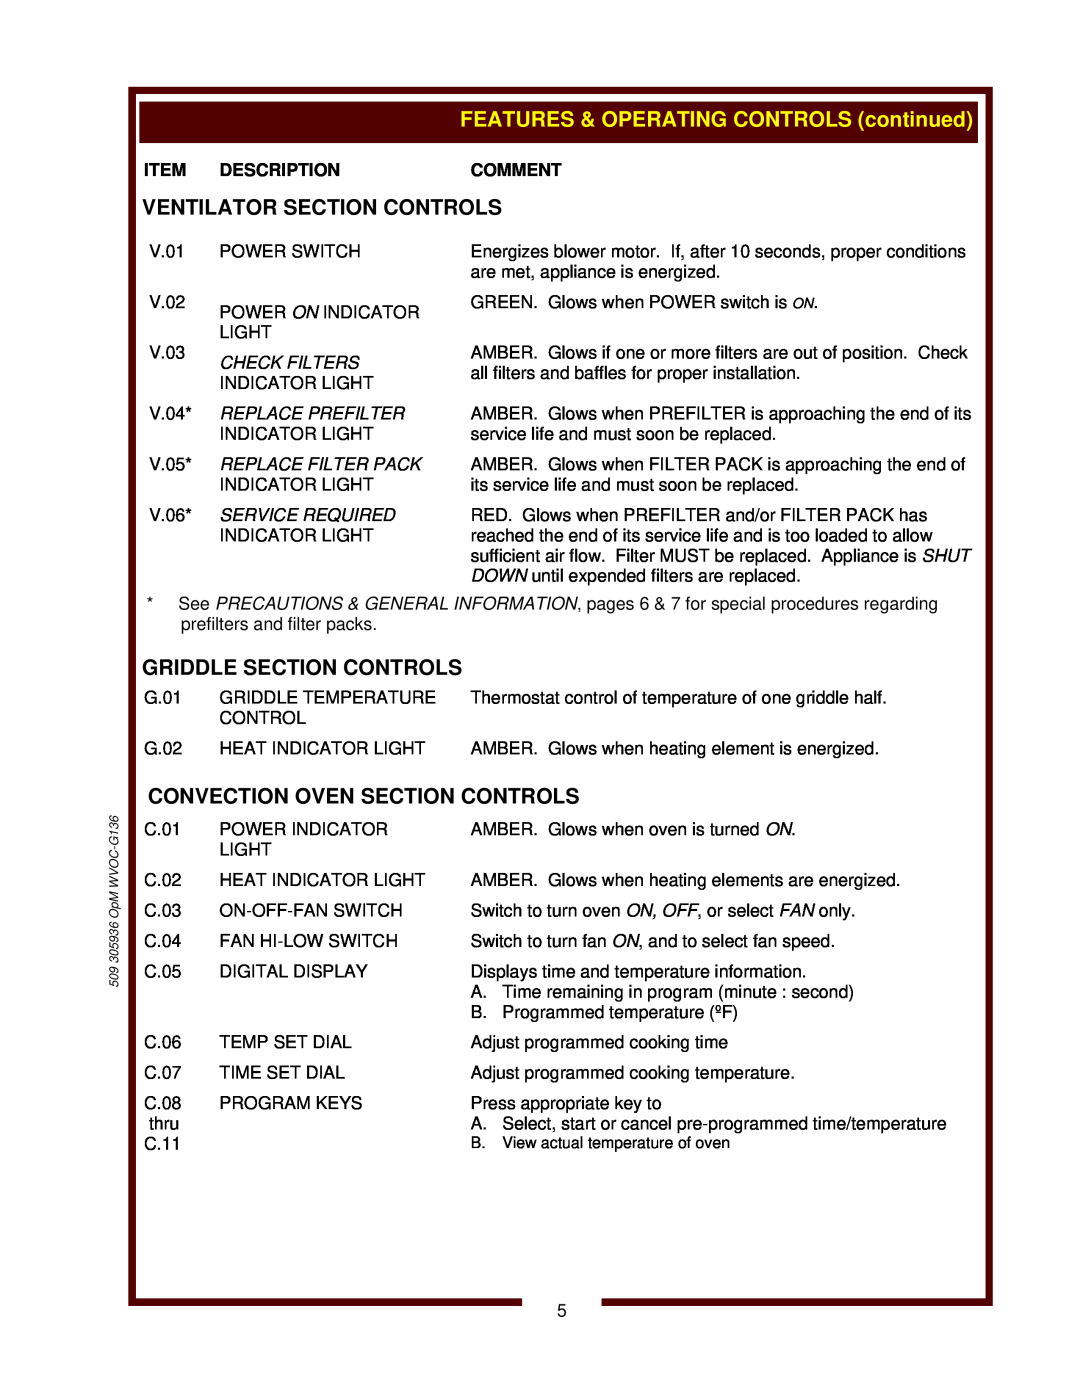 Wells operation manual Ventilator Section Controls, Convection Oven Section Controls, 509 305936 OpM WVOC-G136 